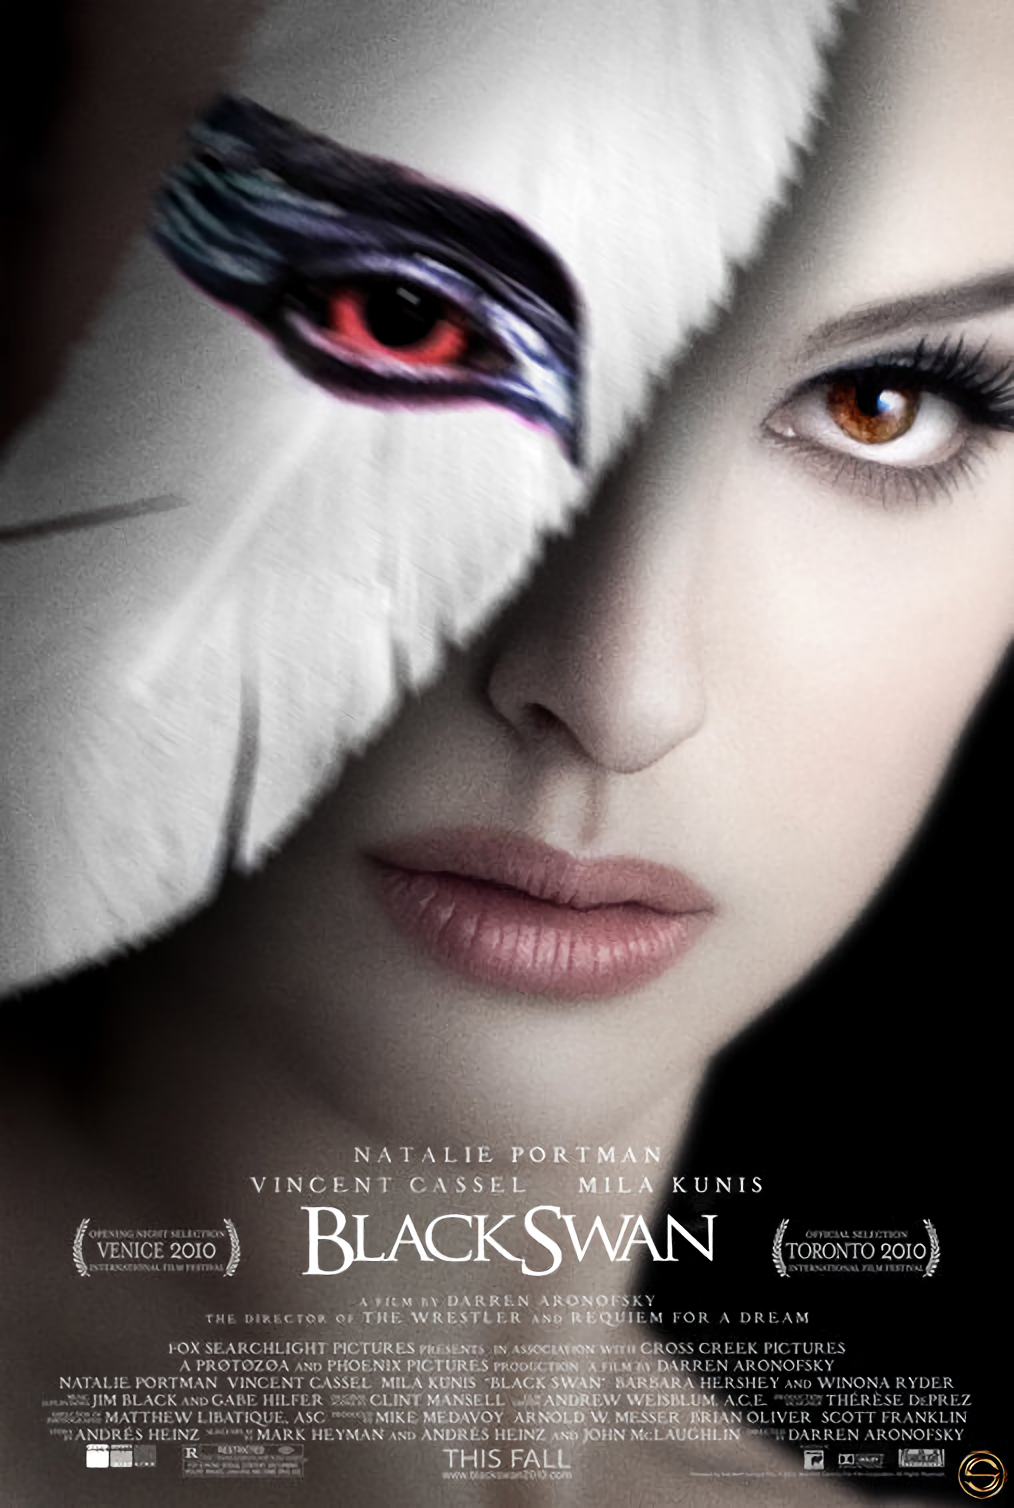 Black Swan (2010) HD Wallpaper From Gallsource.com. Black swan movie, Black swan, Black swan 2010